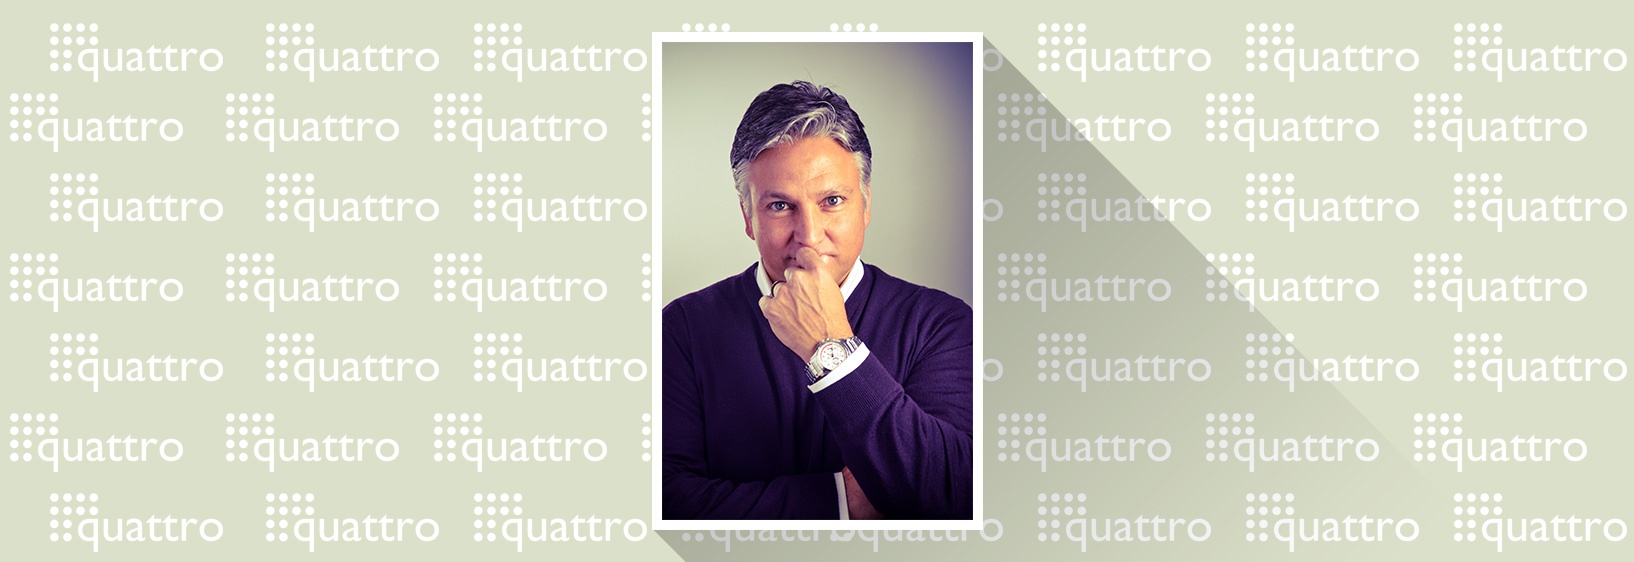 BirthdayPak Founder Michael Marchesani Named VP, Business Development for Quattro